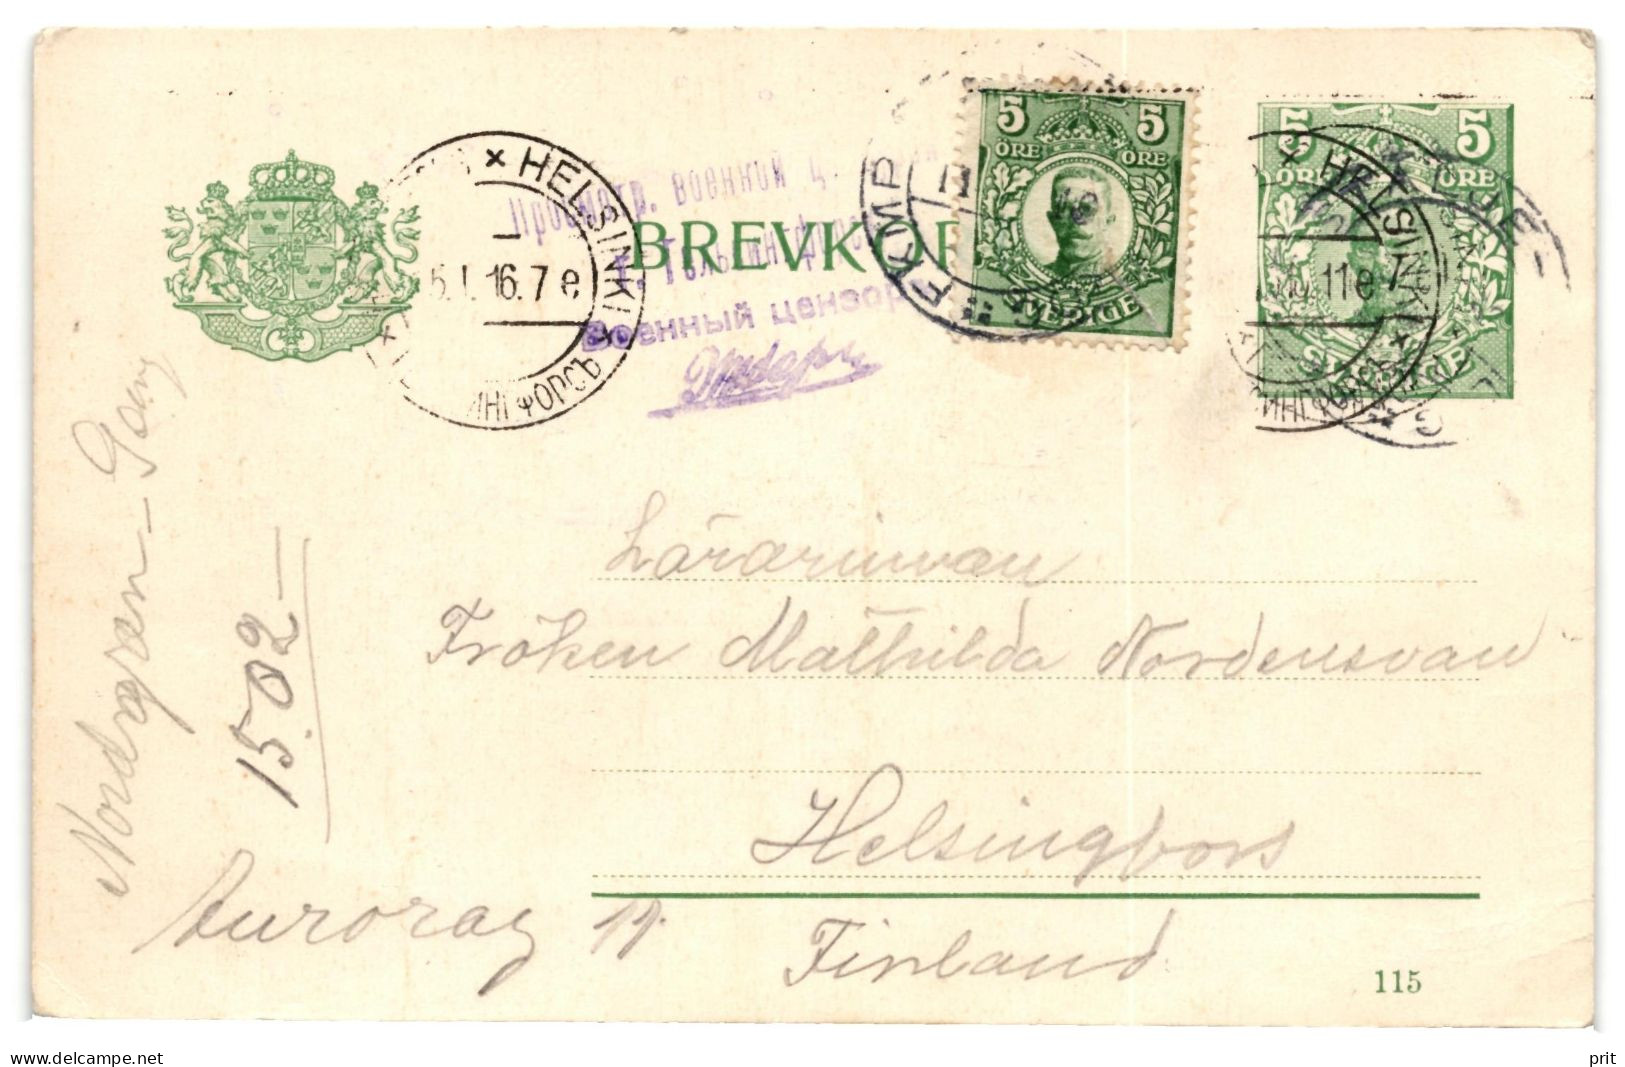 Helsinki Helsingfors WW1 Rare Finland Russian Government Military Censor Cancel 1917 On Swedish Postal Stationery Card - Militares